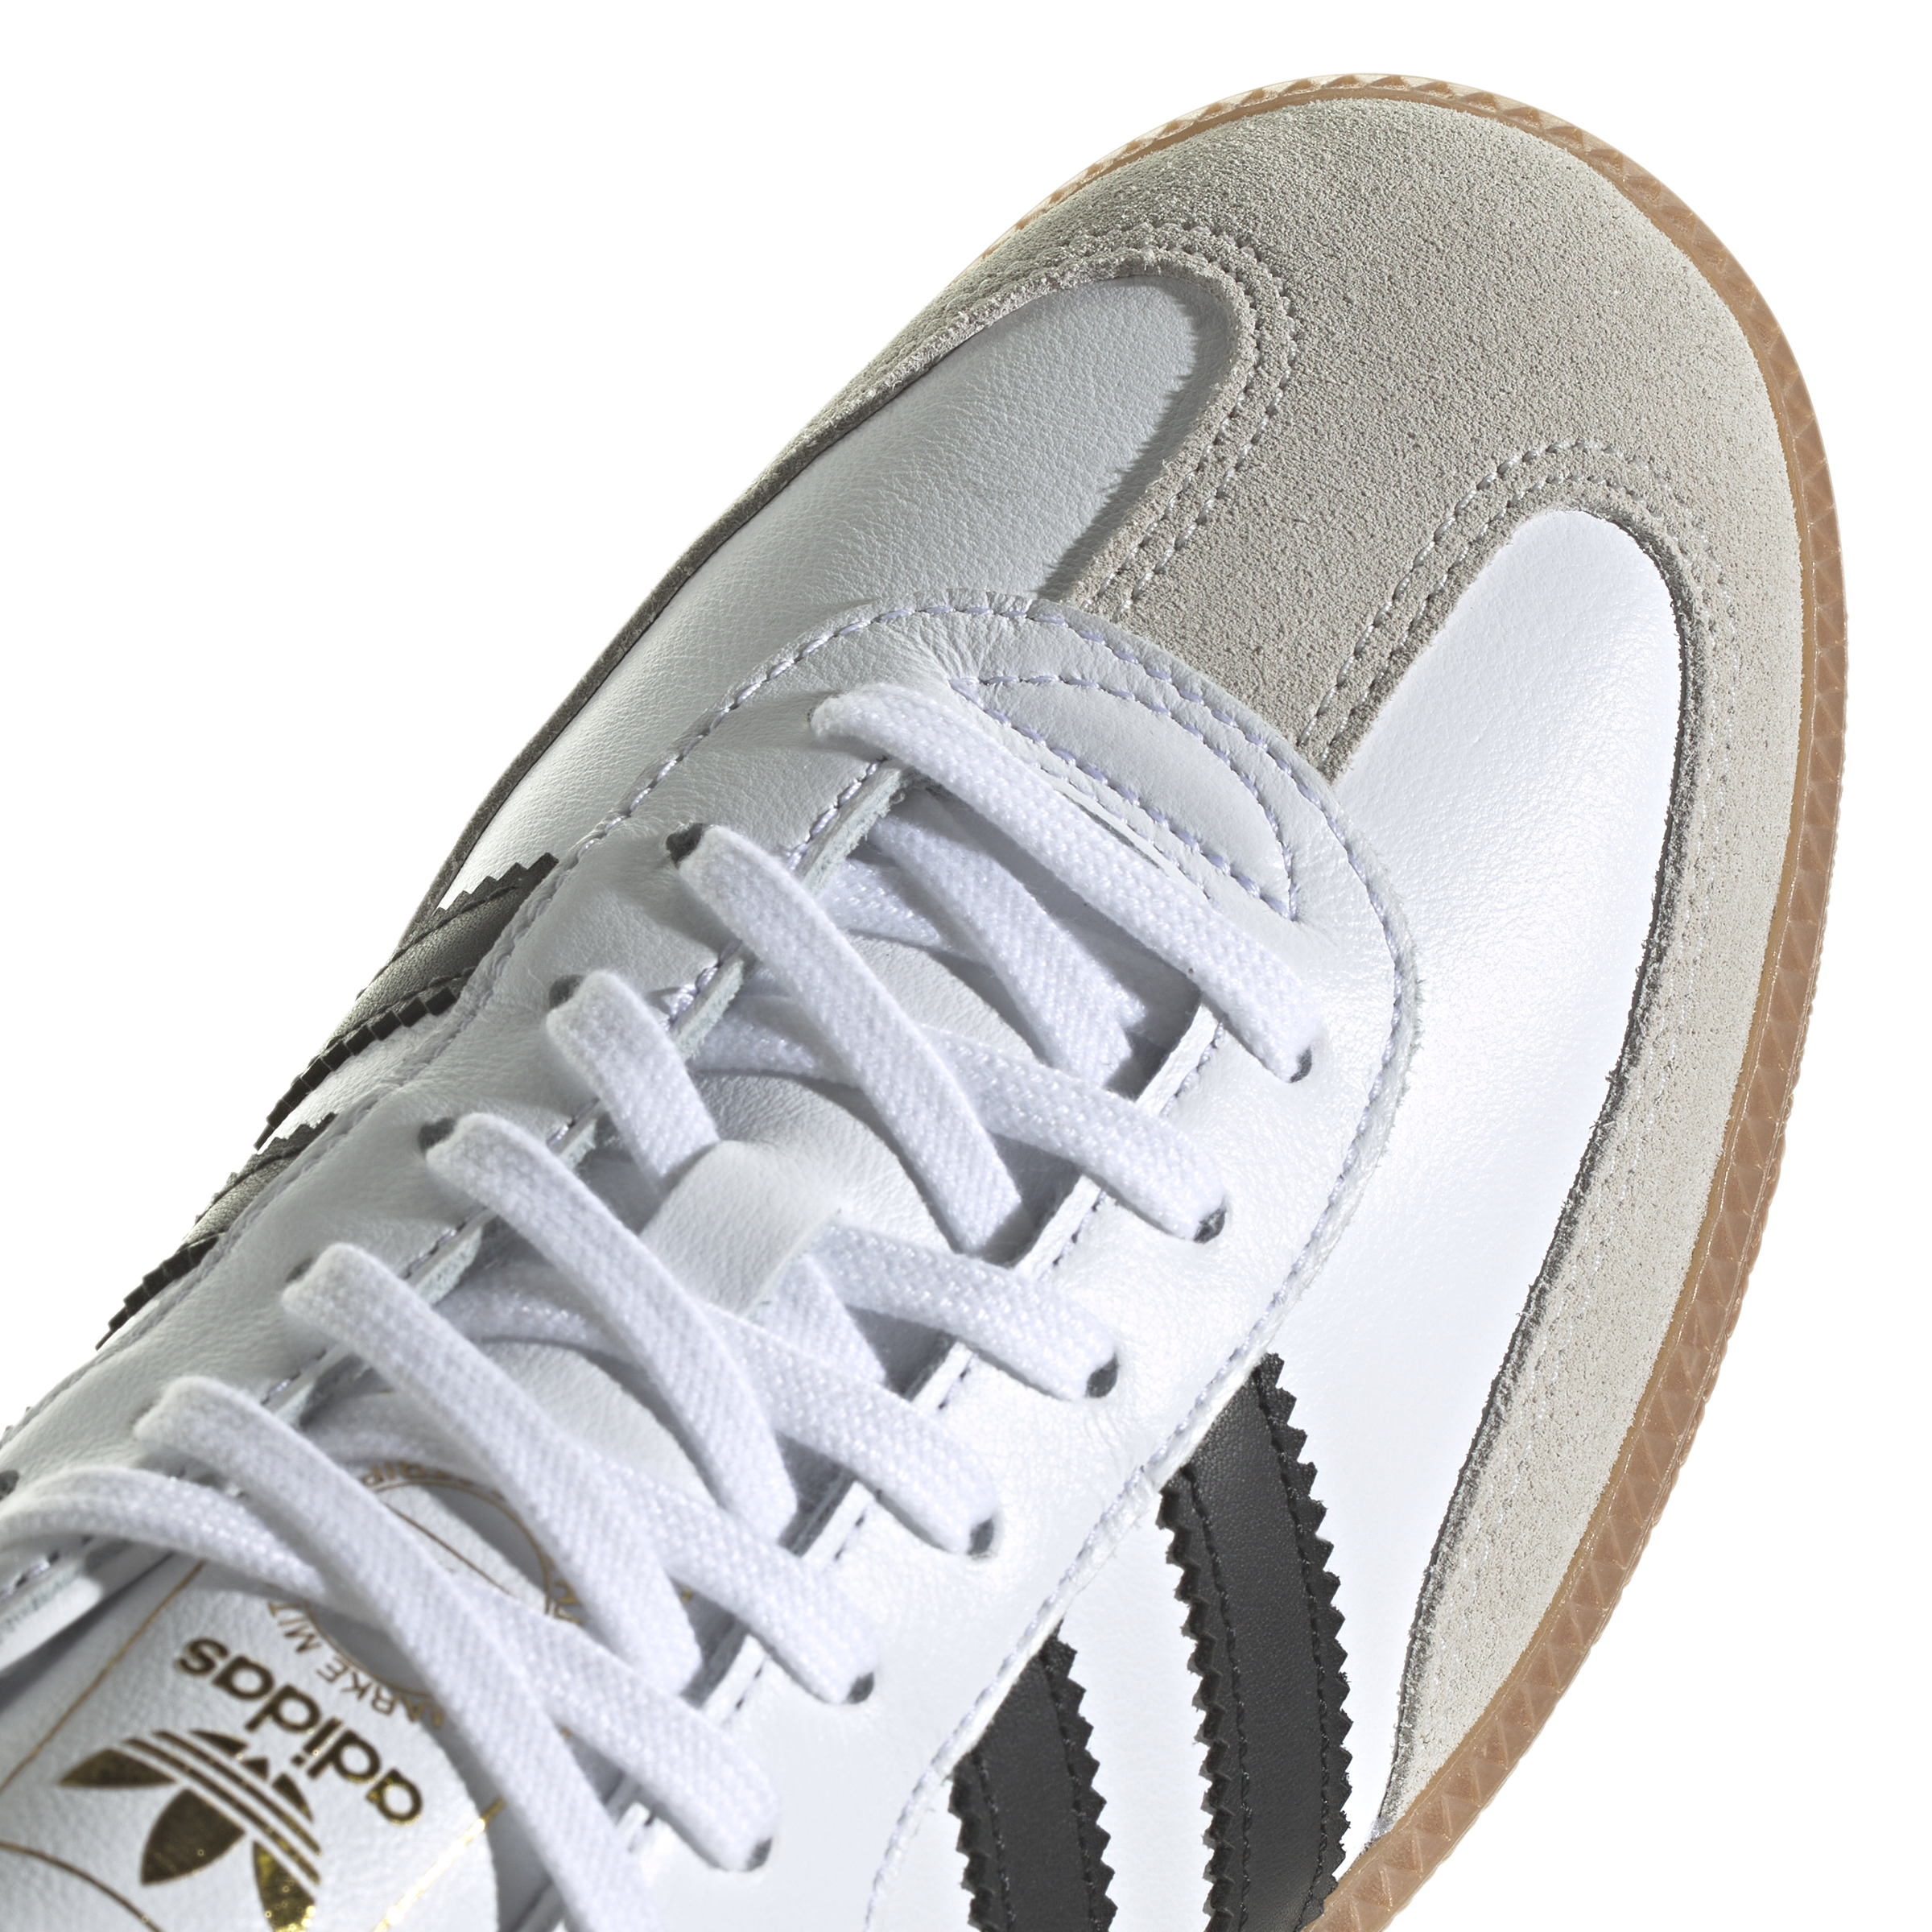 Pantofi sport adidas Originals Samba Decon